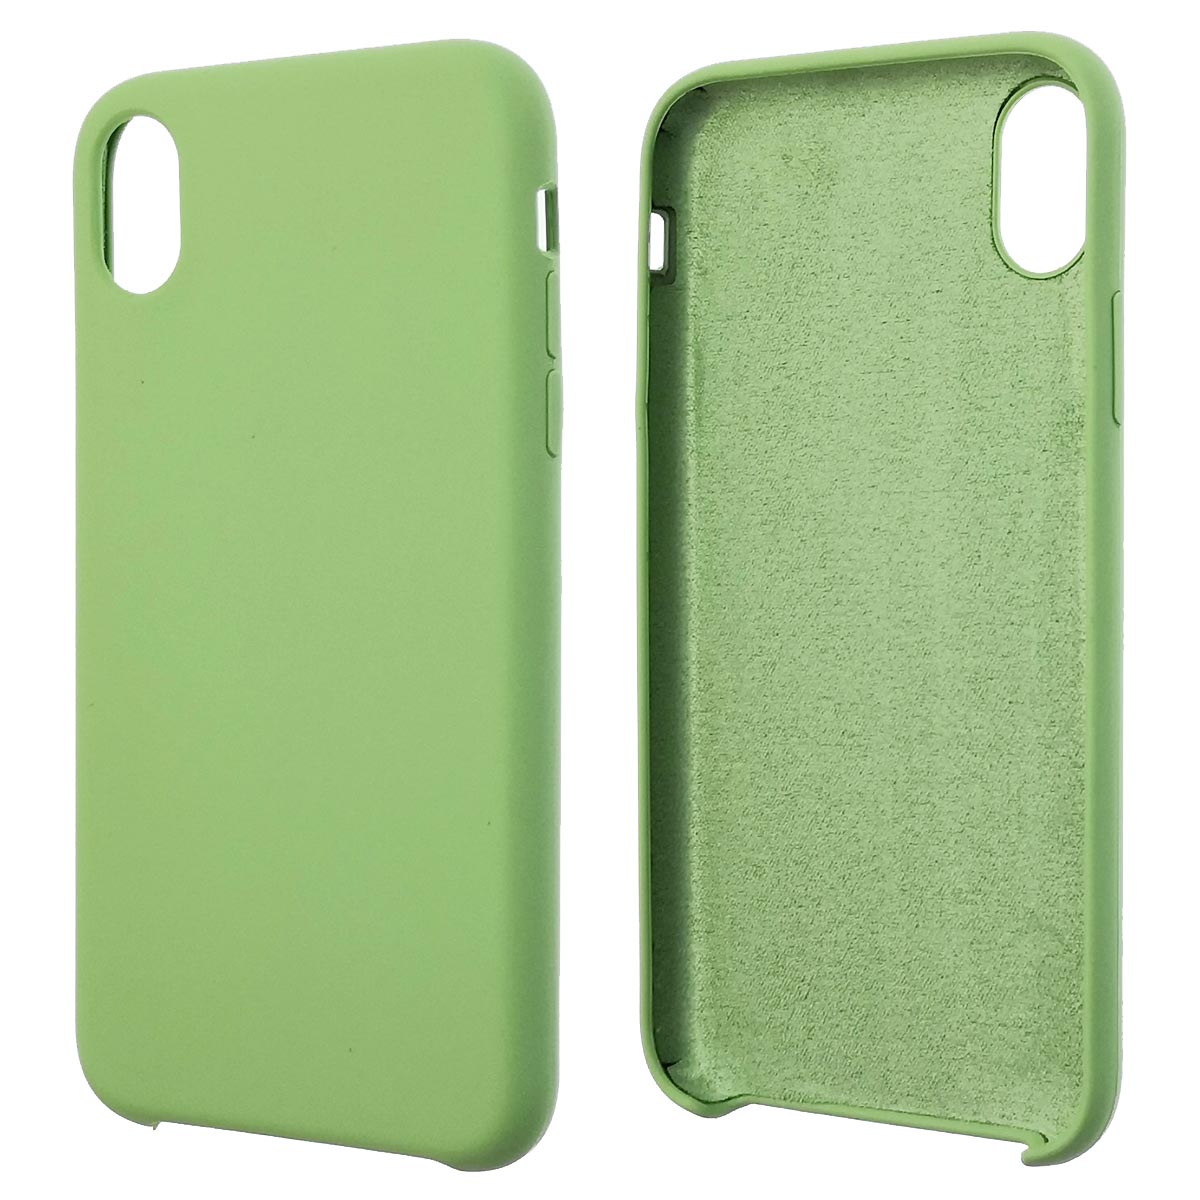 Чехол накладка Silicon Case для APPLE iPhone XR, силикон, бархат, цвет фисташковый